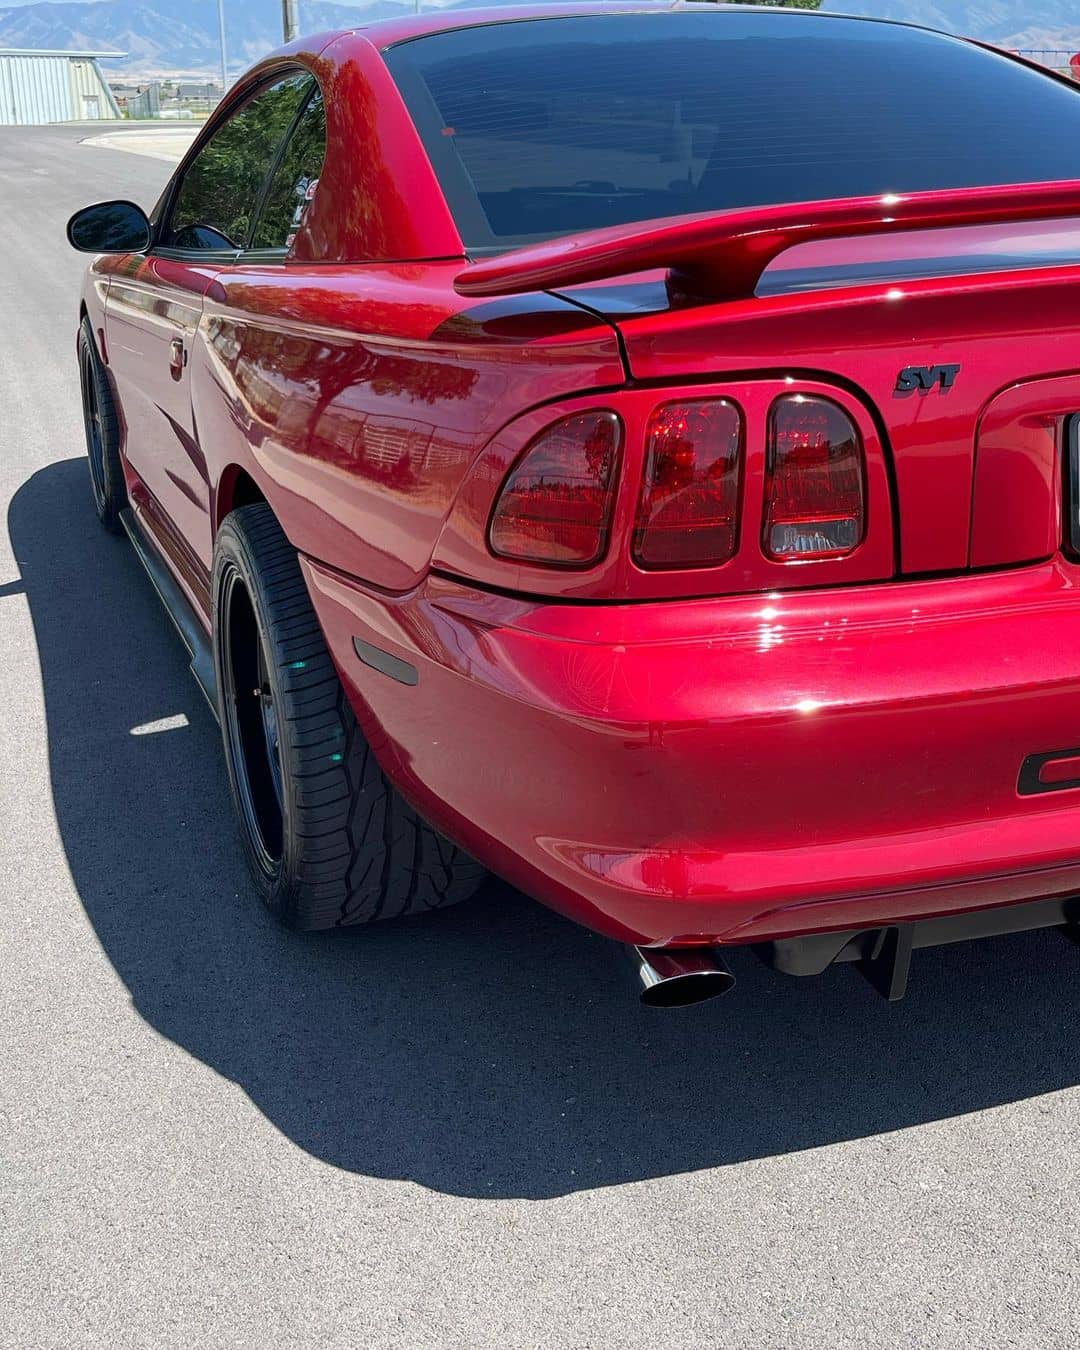 1993-1998 Ford Mustang Cobra rear view